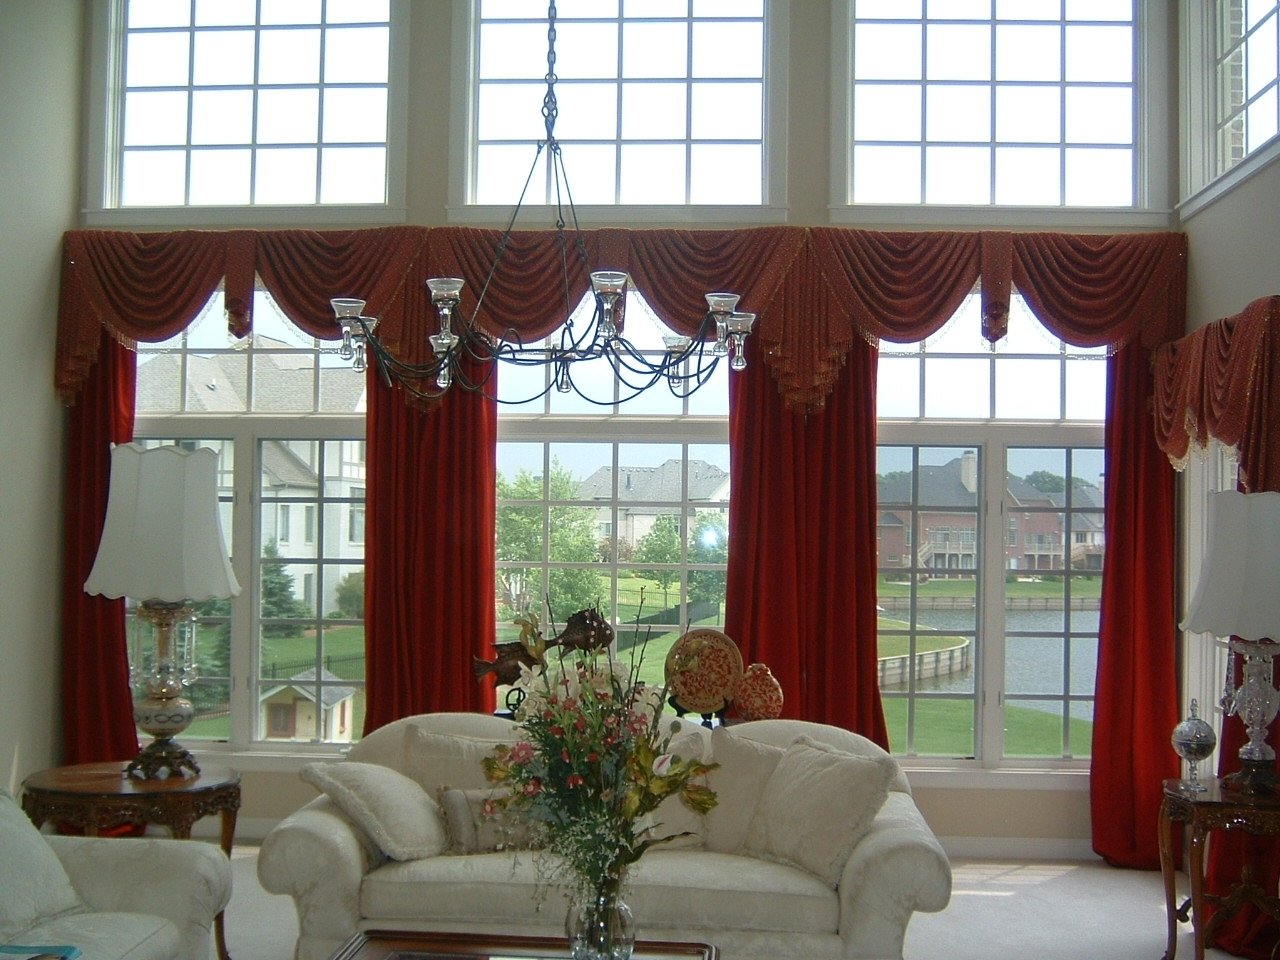 10 Unique Curtain Ideas For Big Windows pleasurable inspiration curtains on big windows inspiration curtains 2022